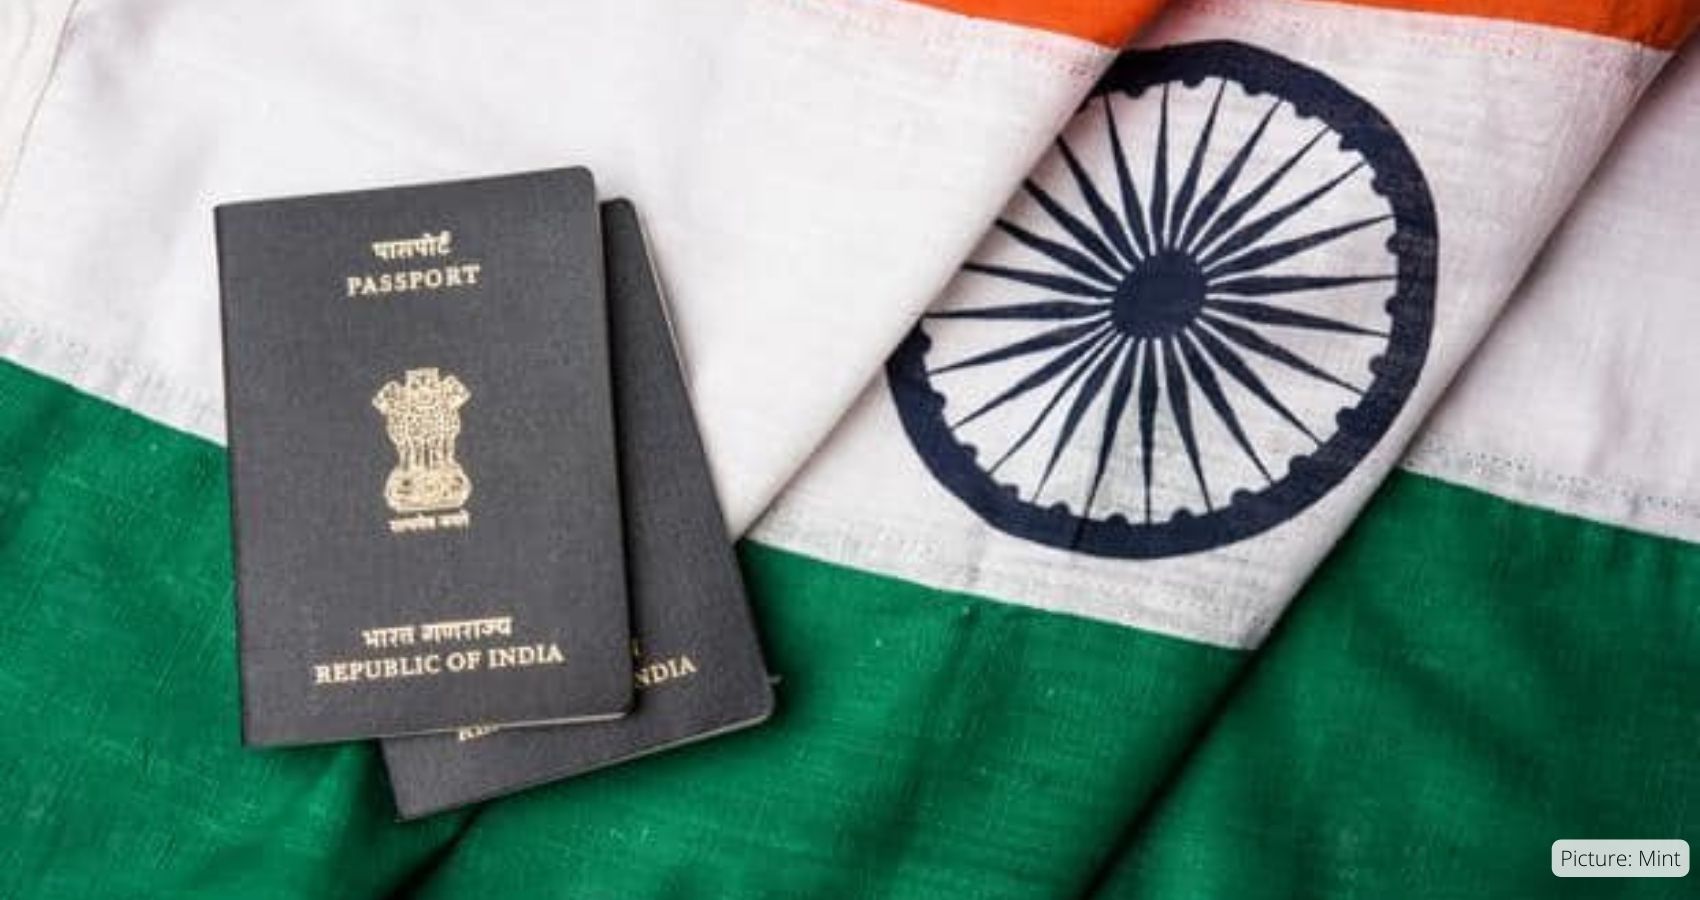 Lanka okays visa-free entry for Indians